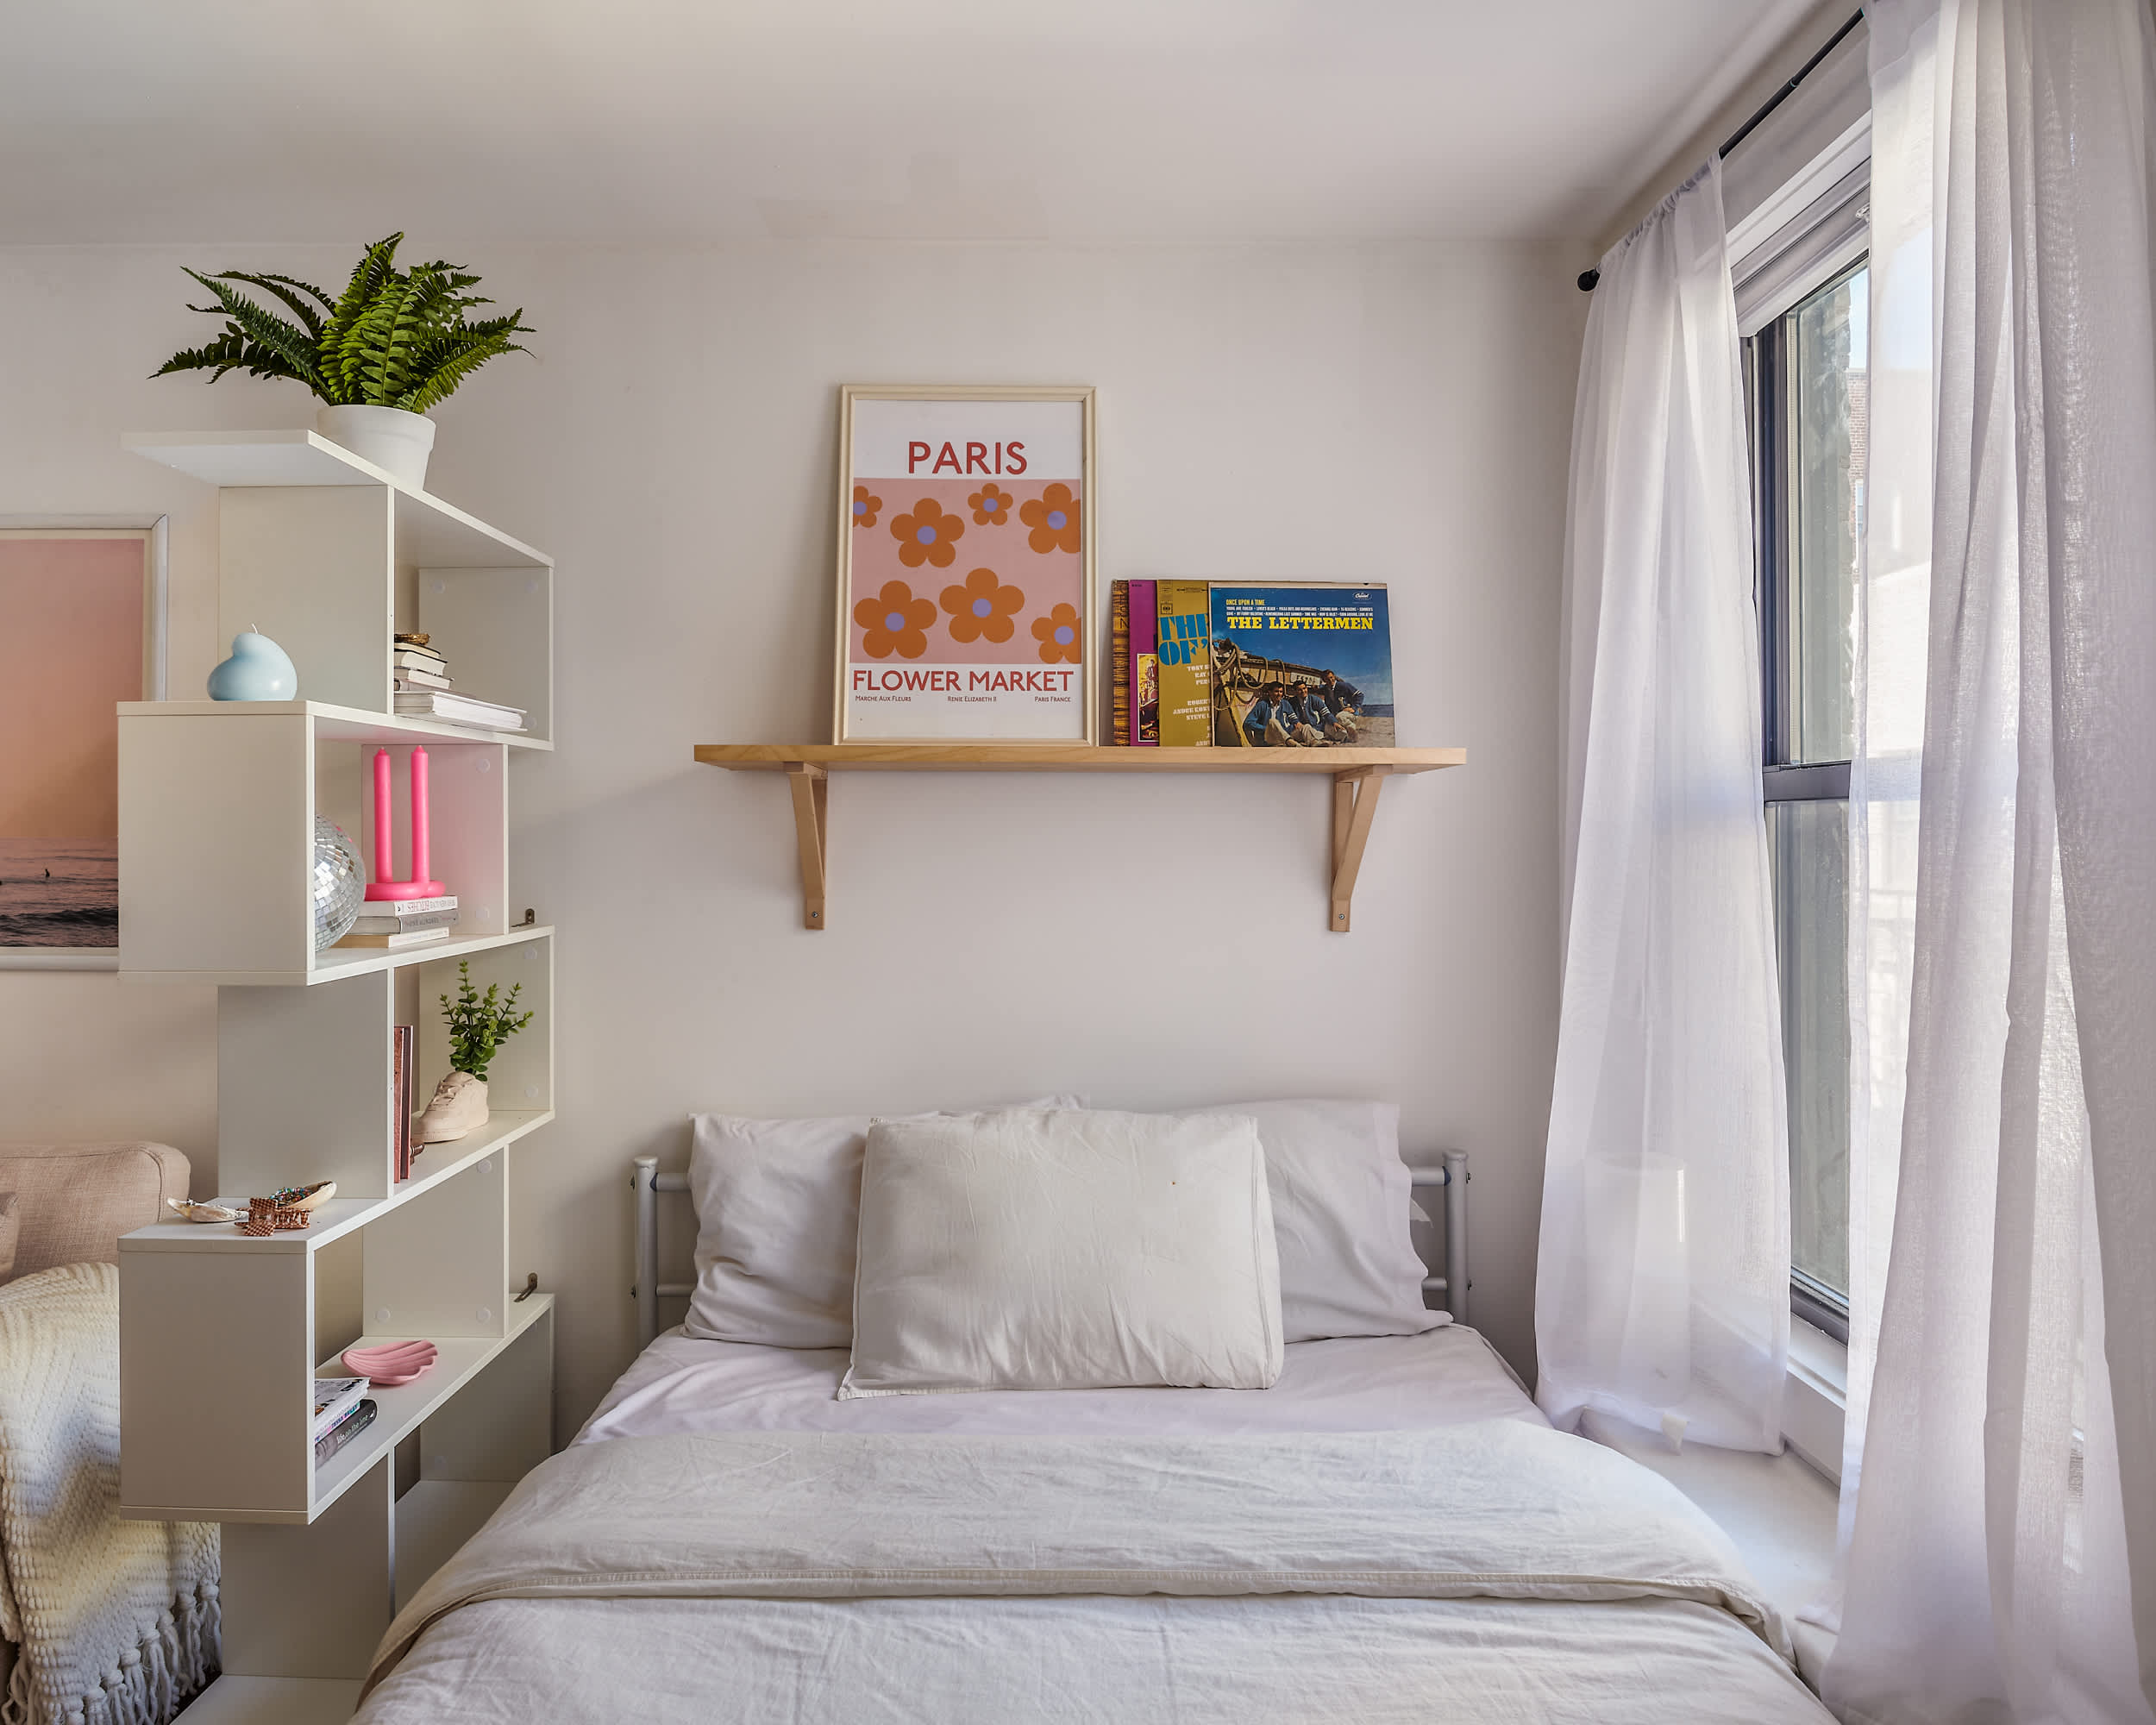 Create a Cozy Boho Bedroom (20 Easy Steps)